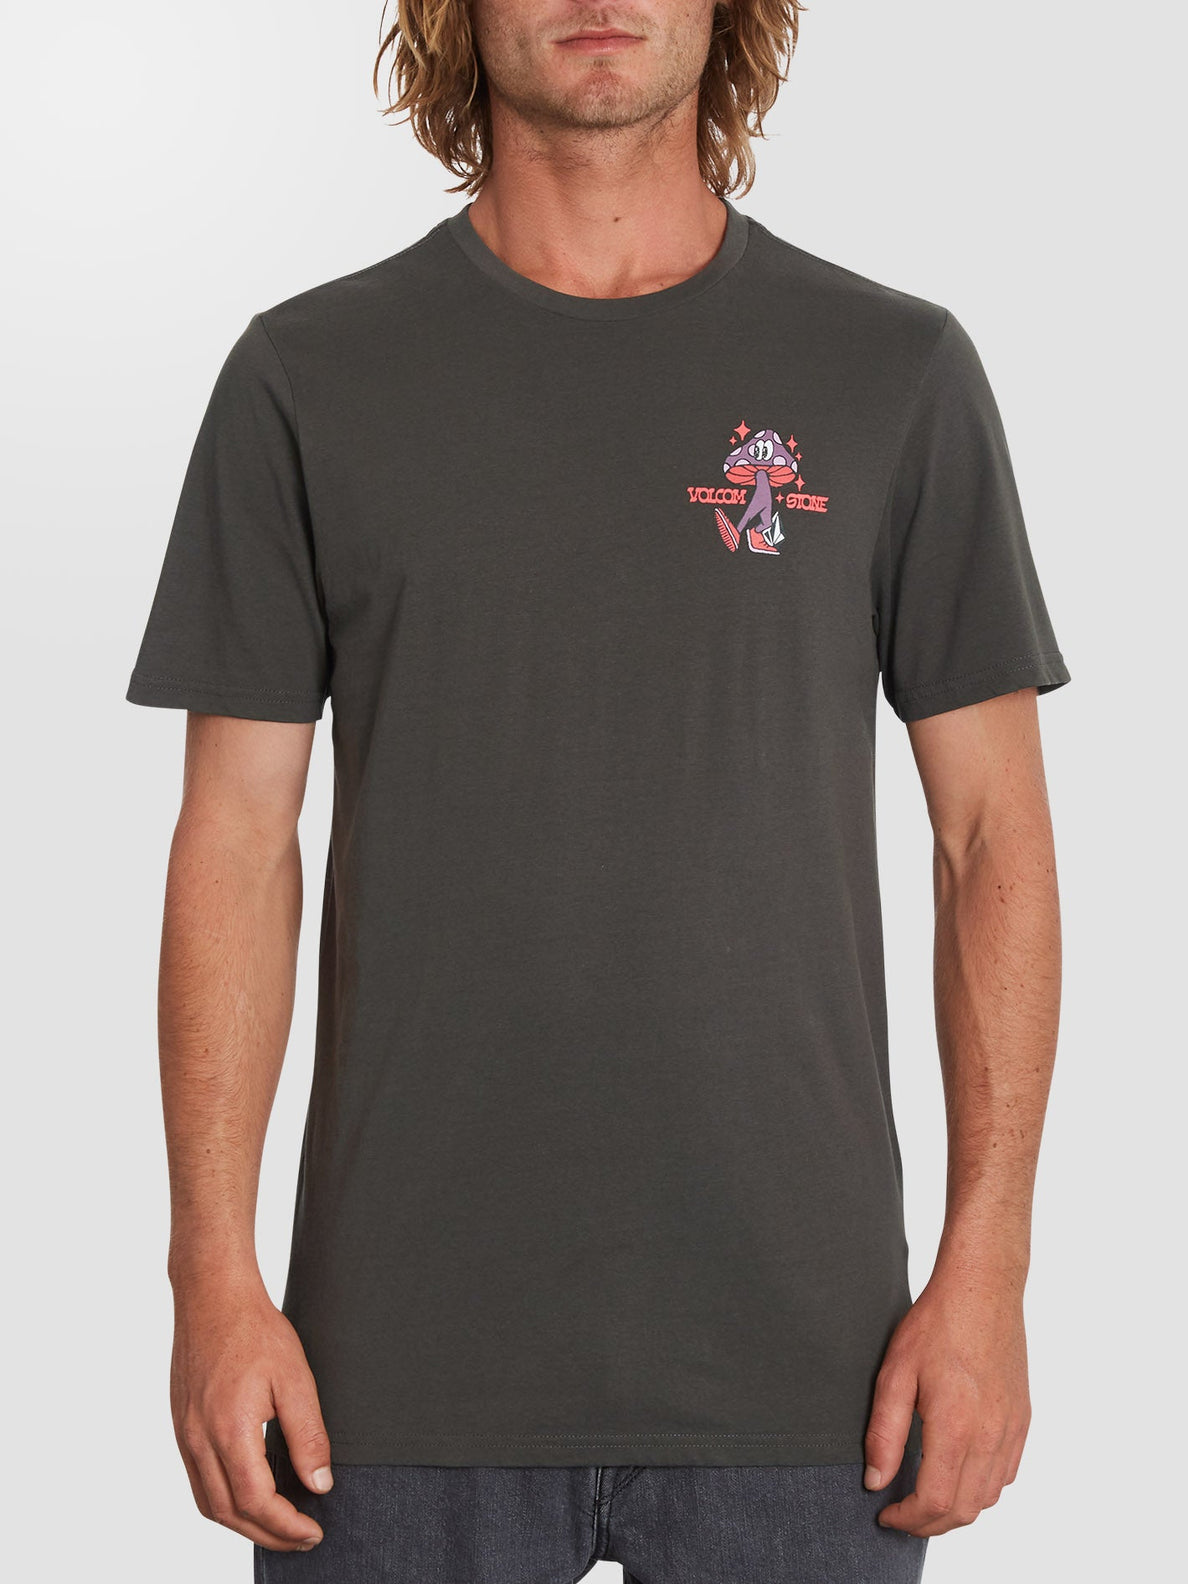 Mr Liberty T-shirt - RINSED BLACK (A5032205_RIB) [B]